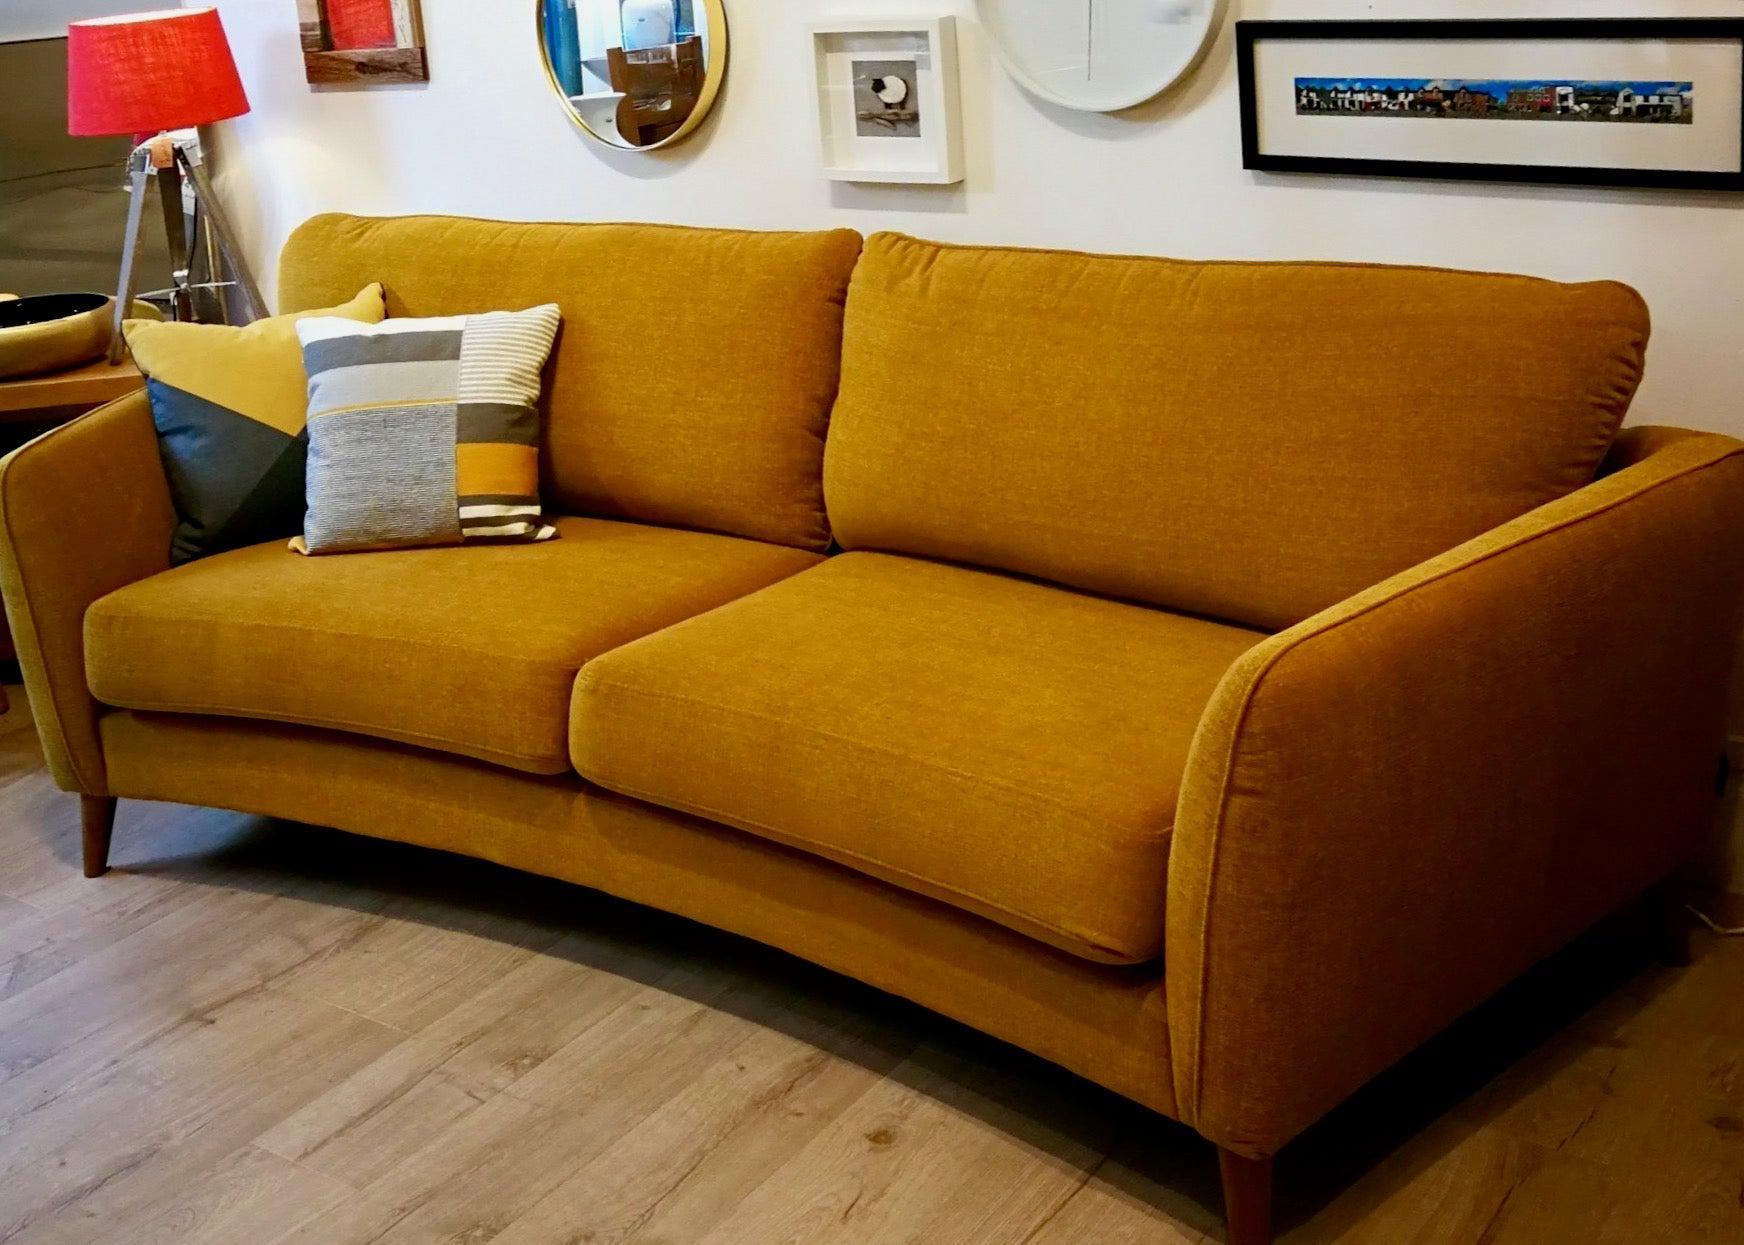 Kensington Sofa - 3 Seater in Mustard - The Nancy Smillie Shop - Art, Jewellery & Designer Gifts Glasgow